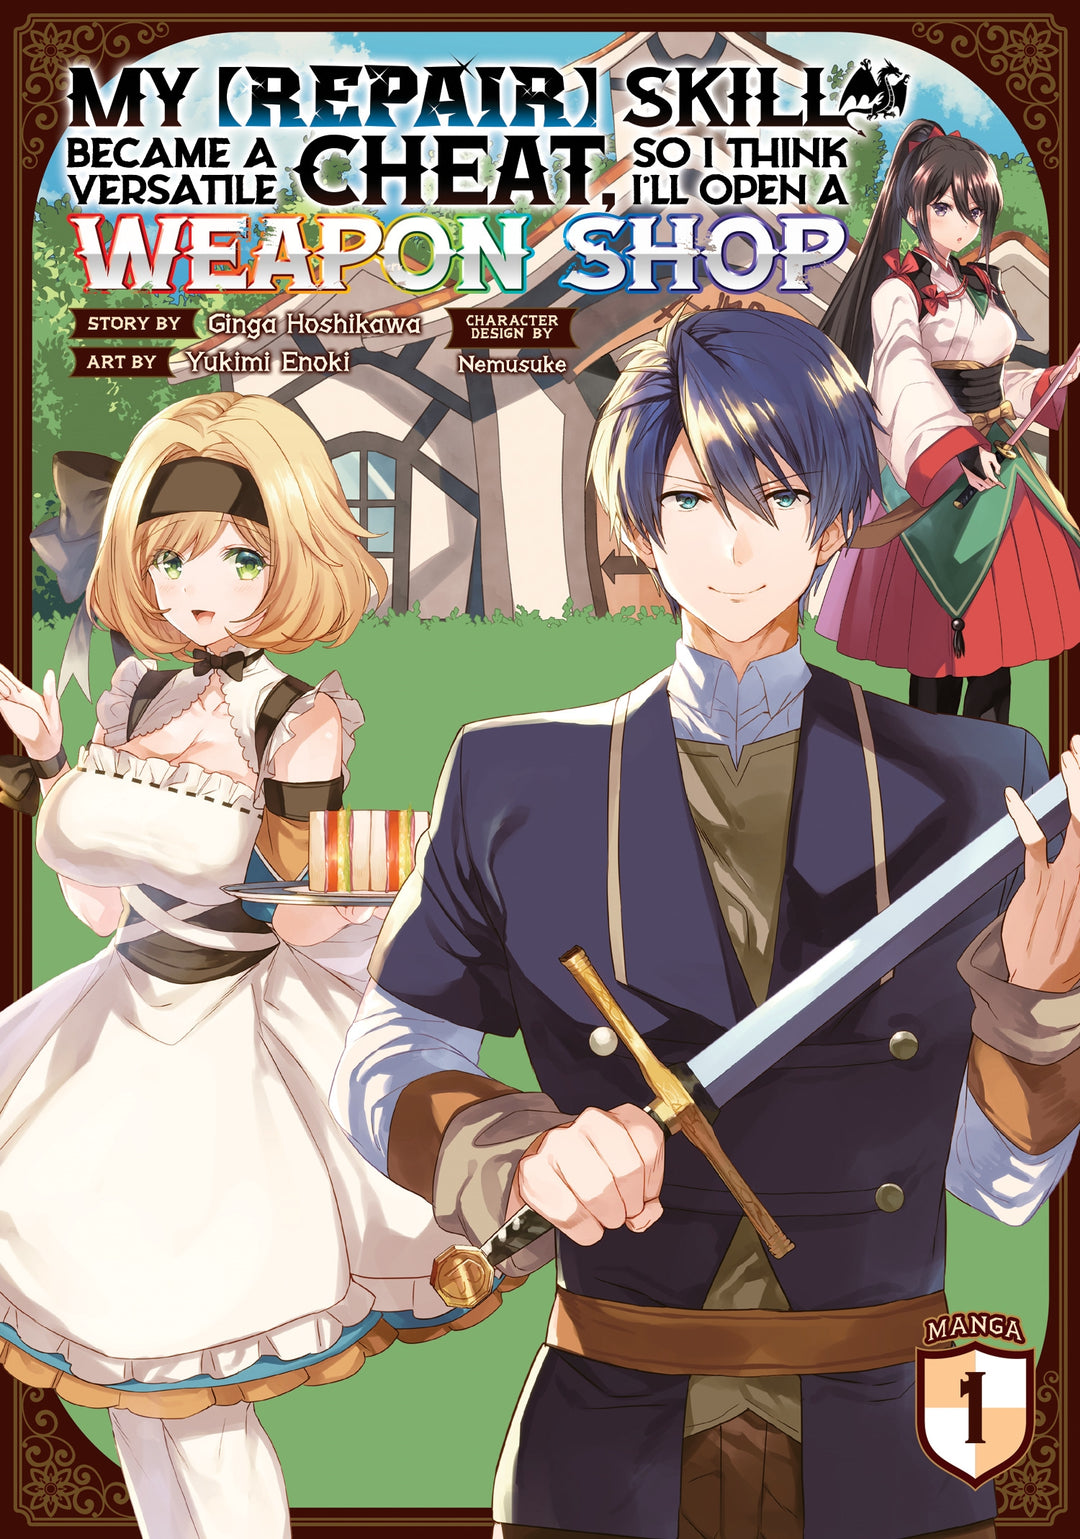 My [Repair] Skill Became a Versatile Cheat, So I Think I'll Open a Weapon Shop (Manga), Vol. 01